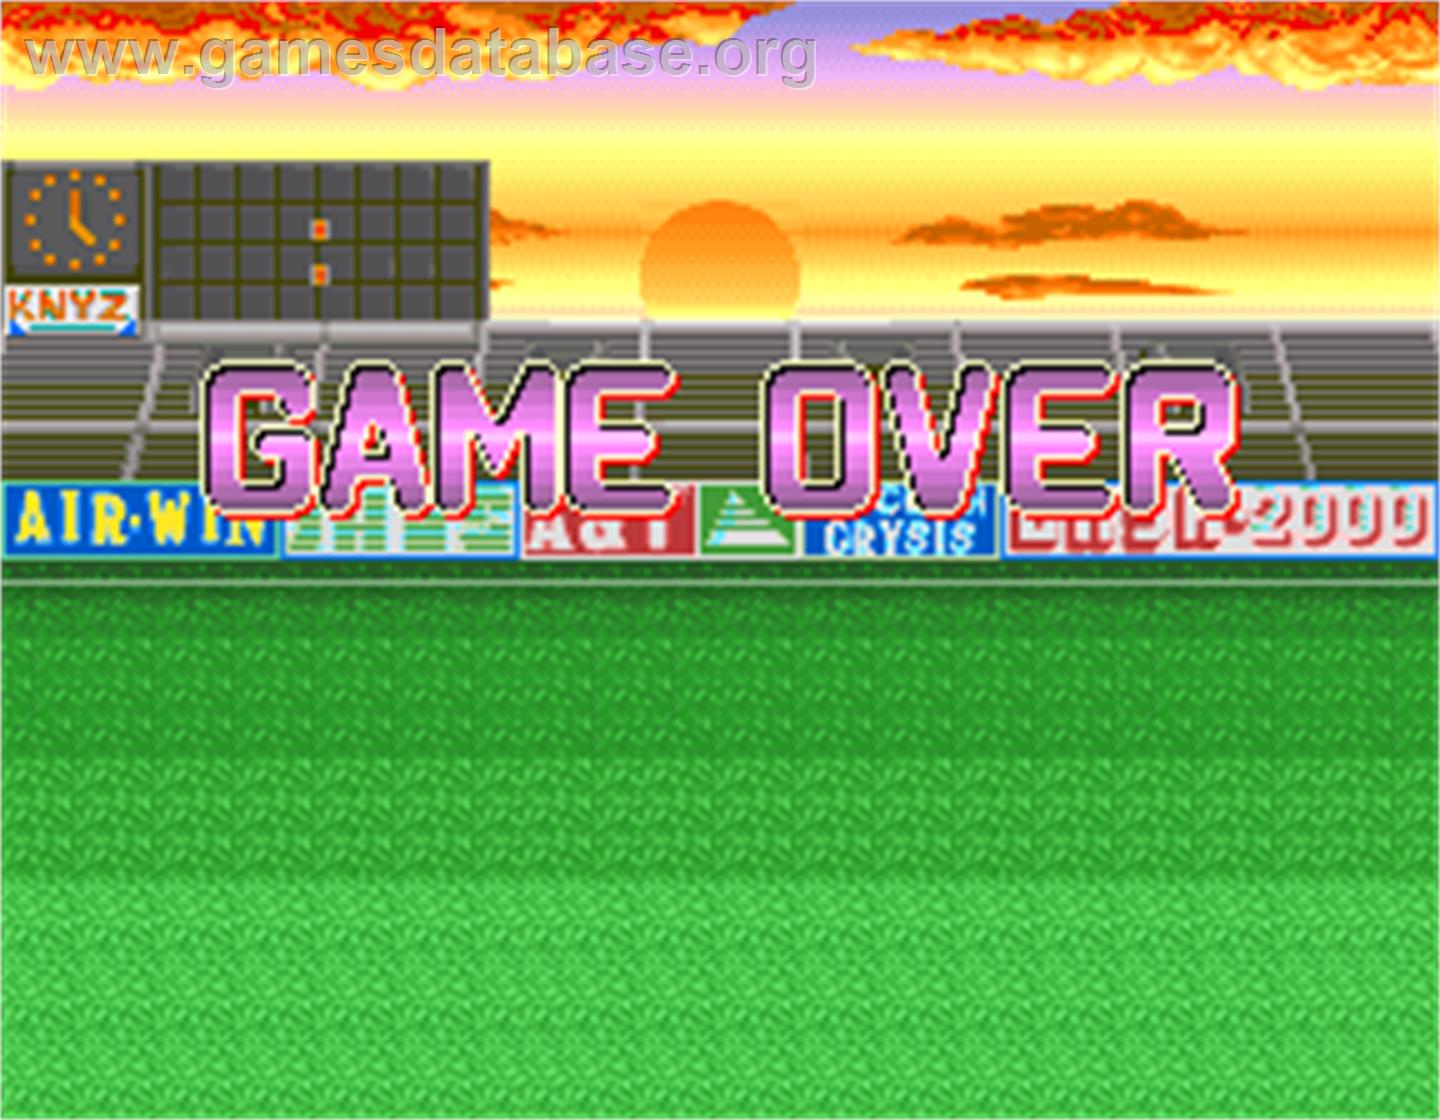 Premier Soccer - Arcade - Artwork - Game Over Screen